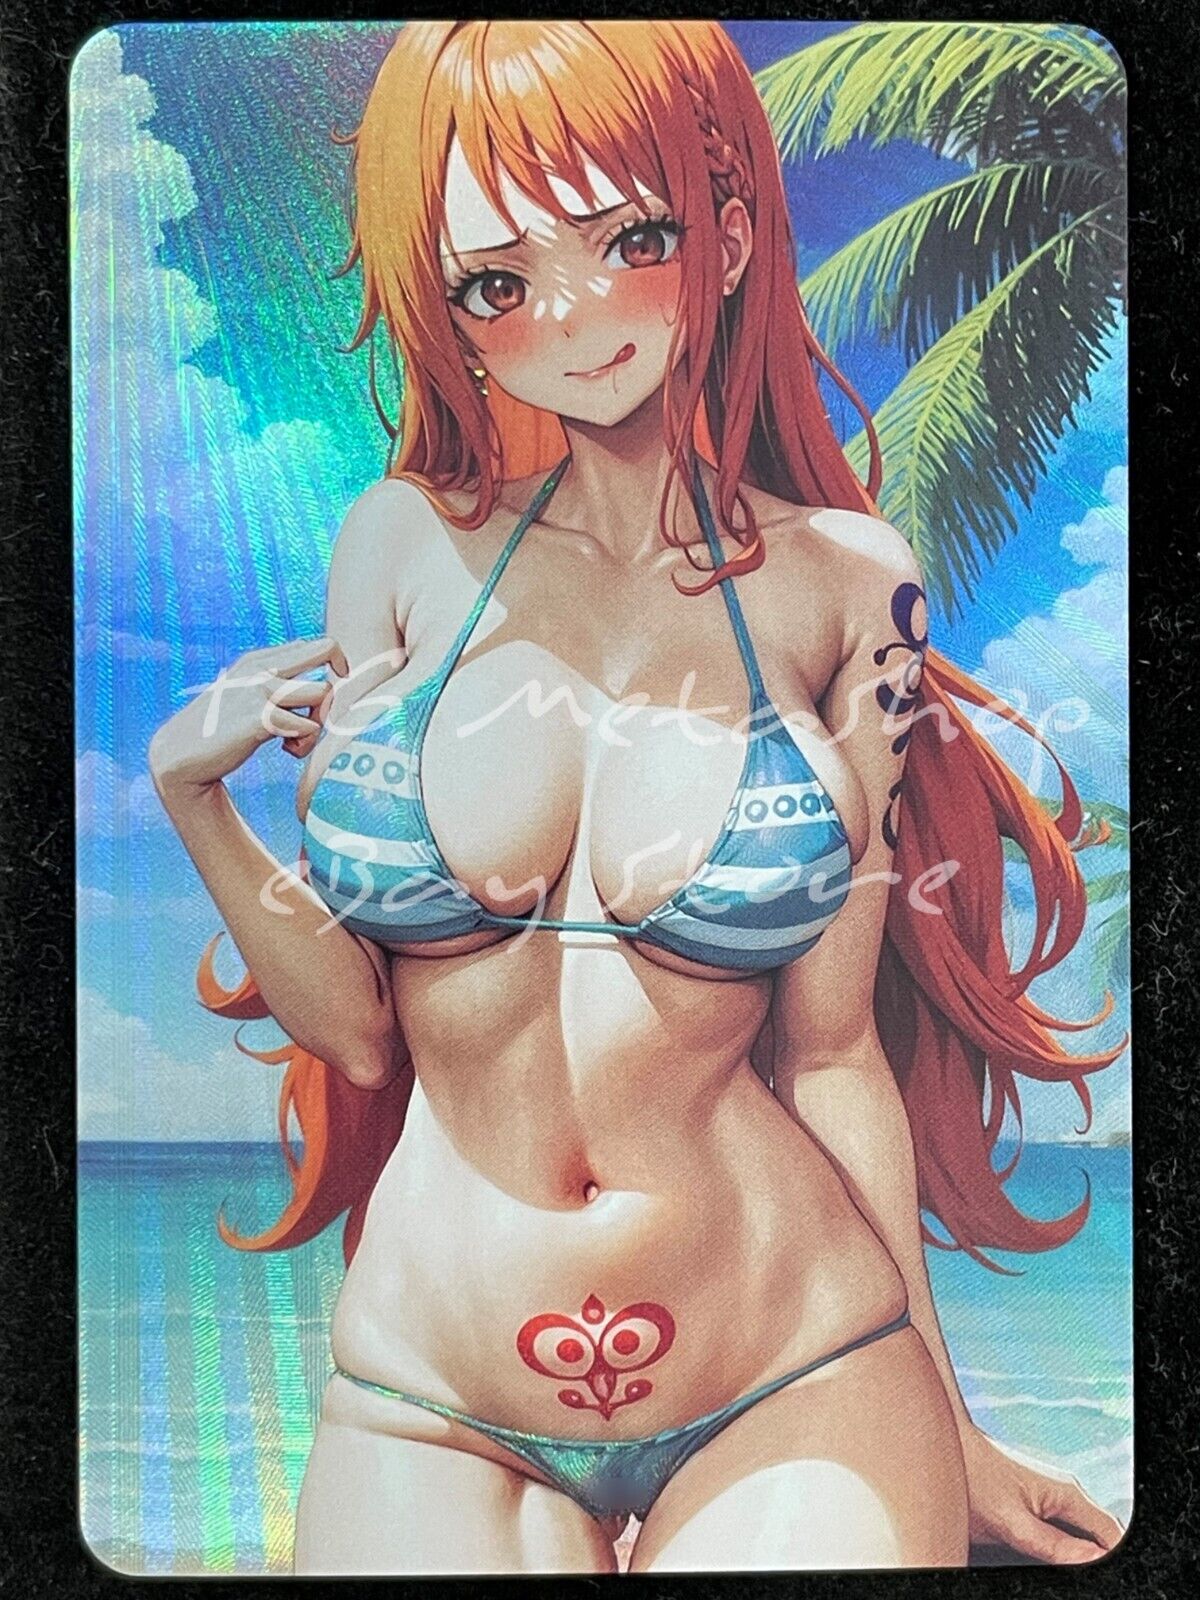 🔥 Nami One Piece Goddess Story Anime Card ACG # 1841 🔥